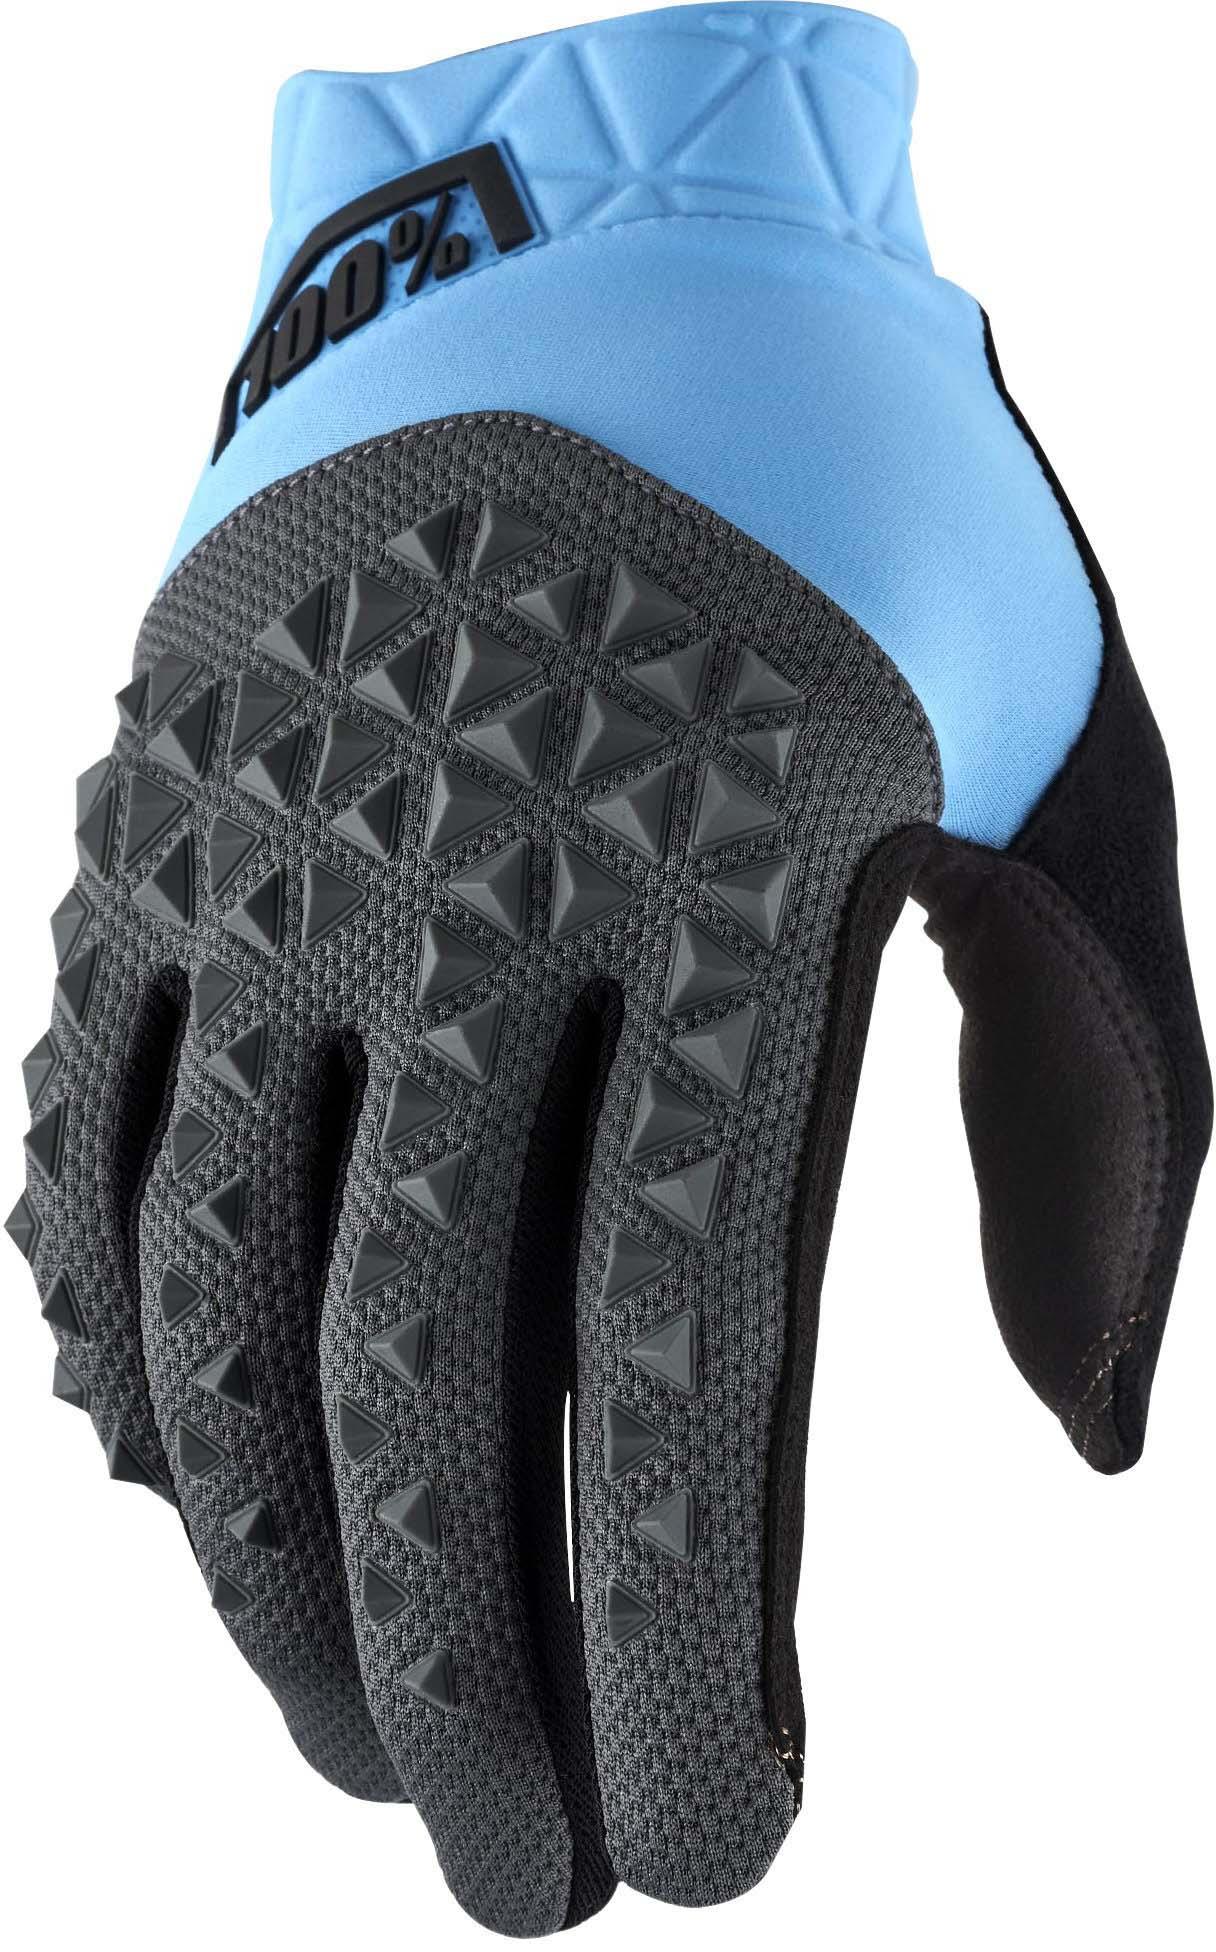 100% Brisker Gloves - L Camo/black  Gloves